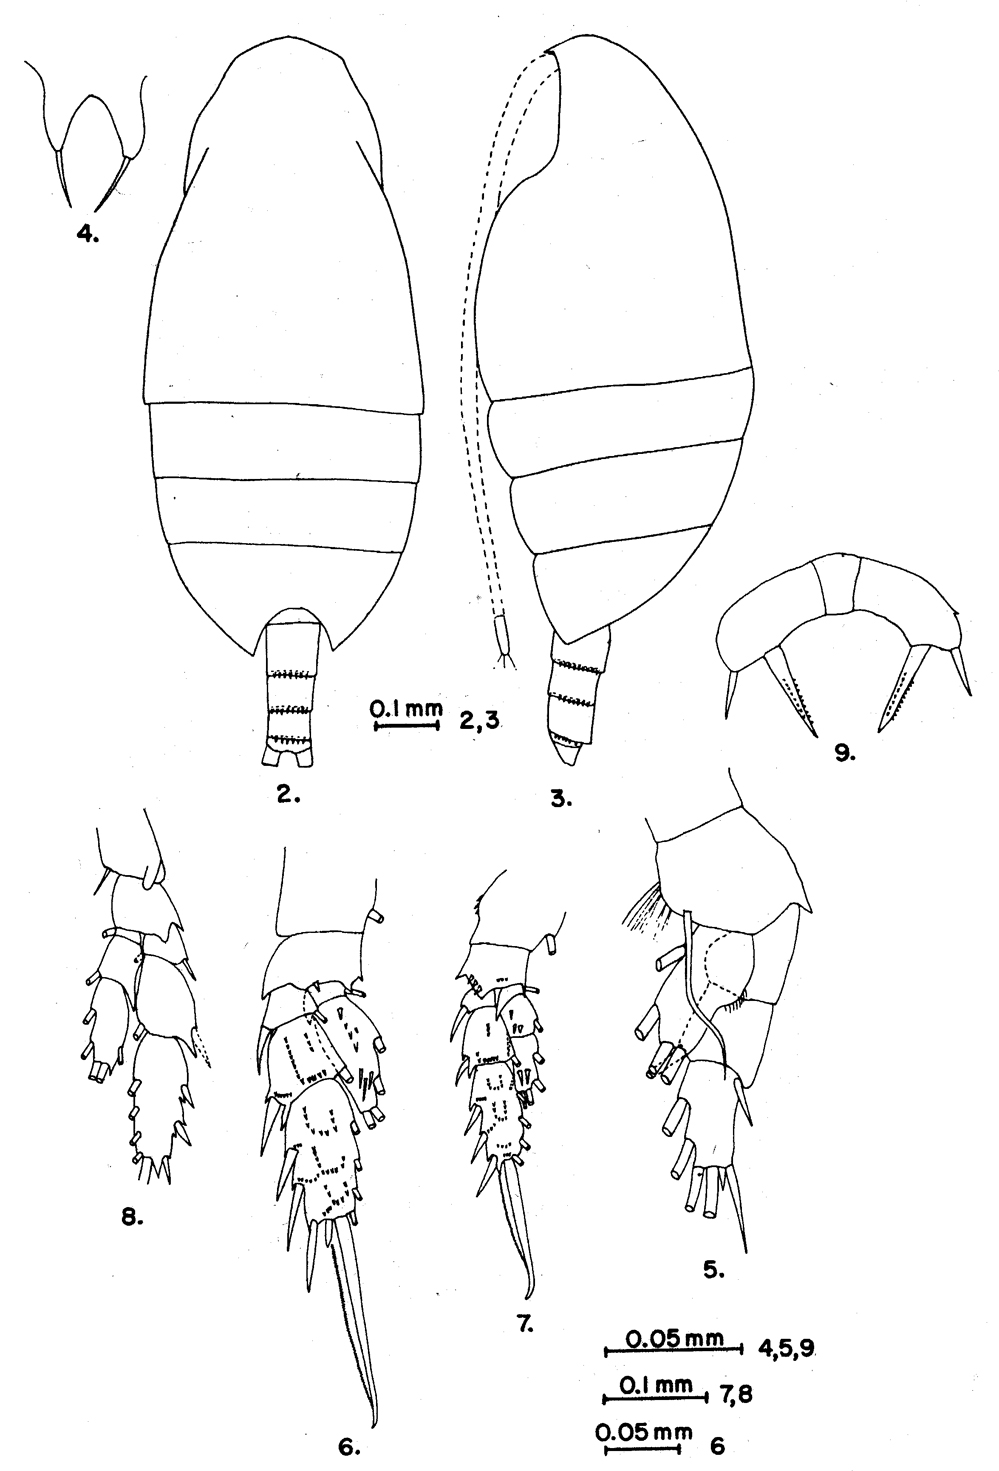 Species Scolecithricella marginata - Plate 3 of morphological figures